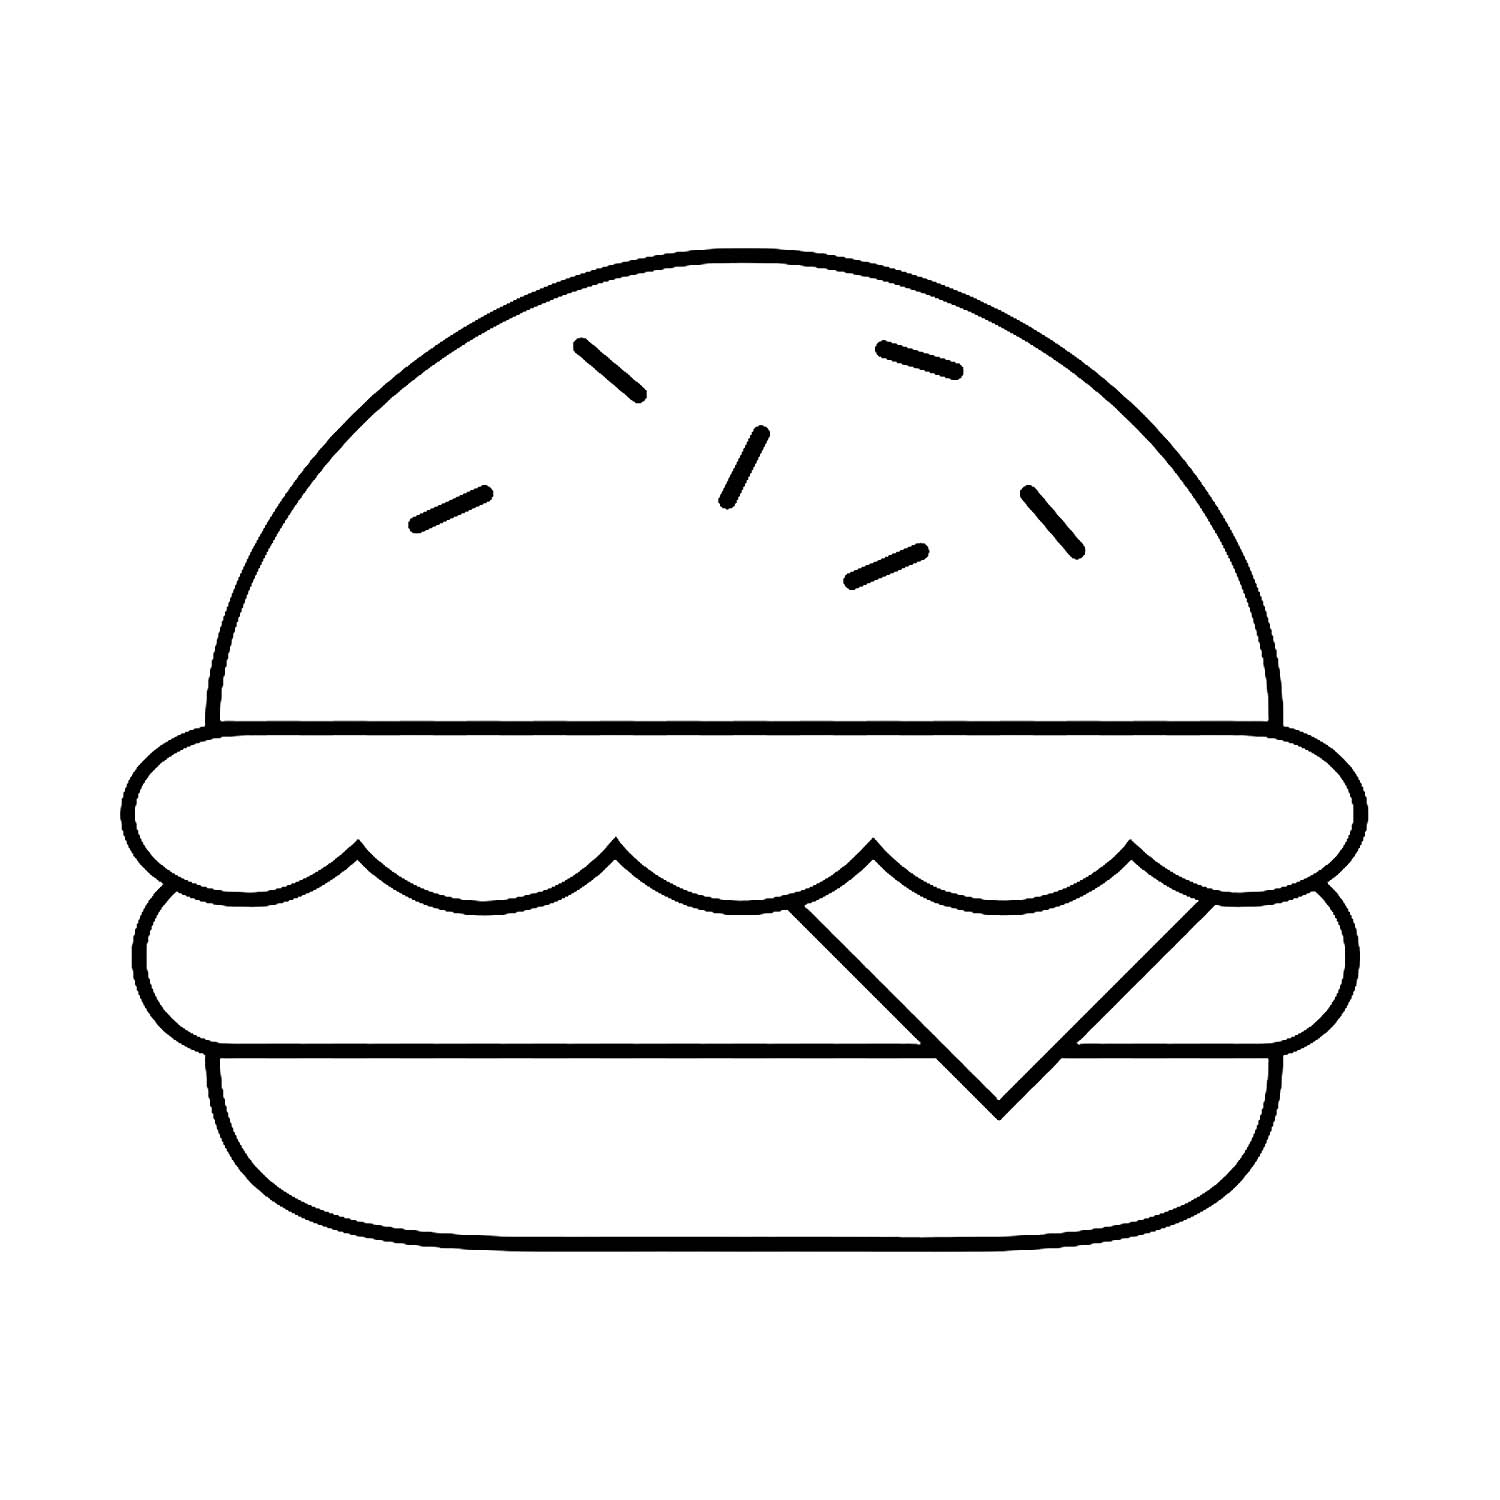 Раскраска Гамбургер | Раскраски для детей: 10 разукрашек